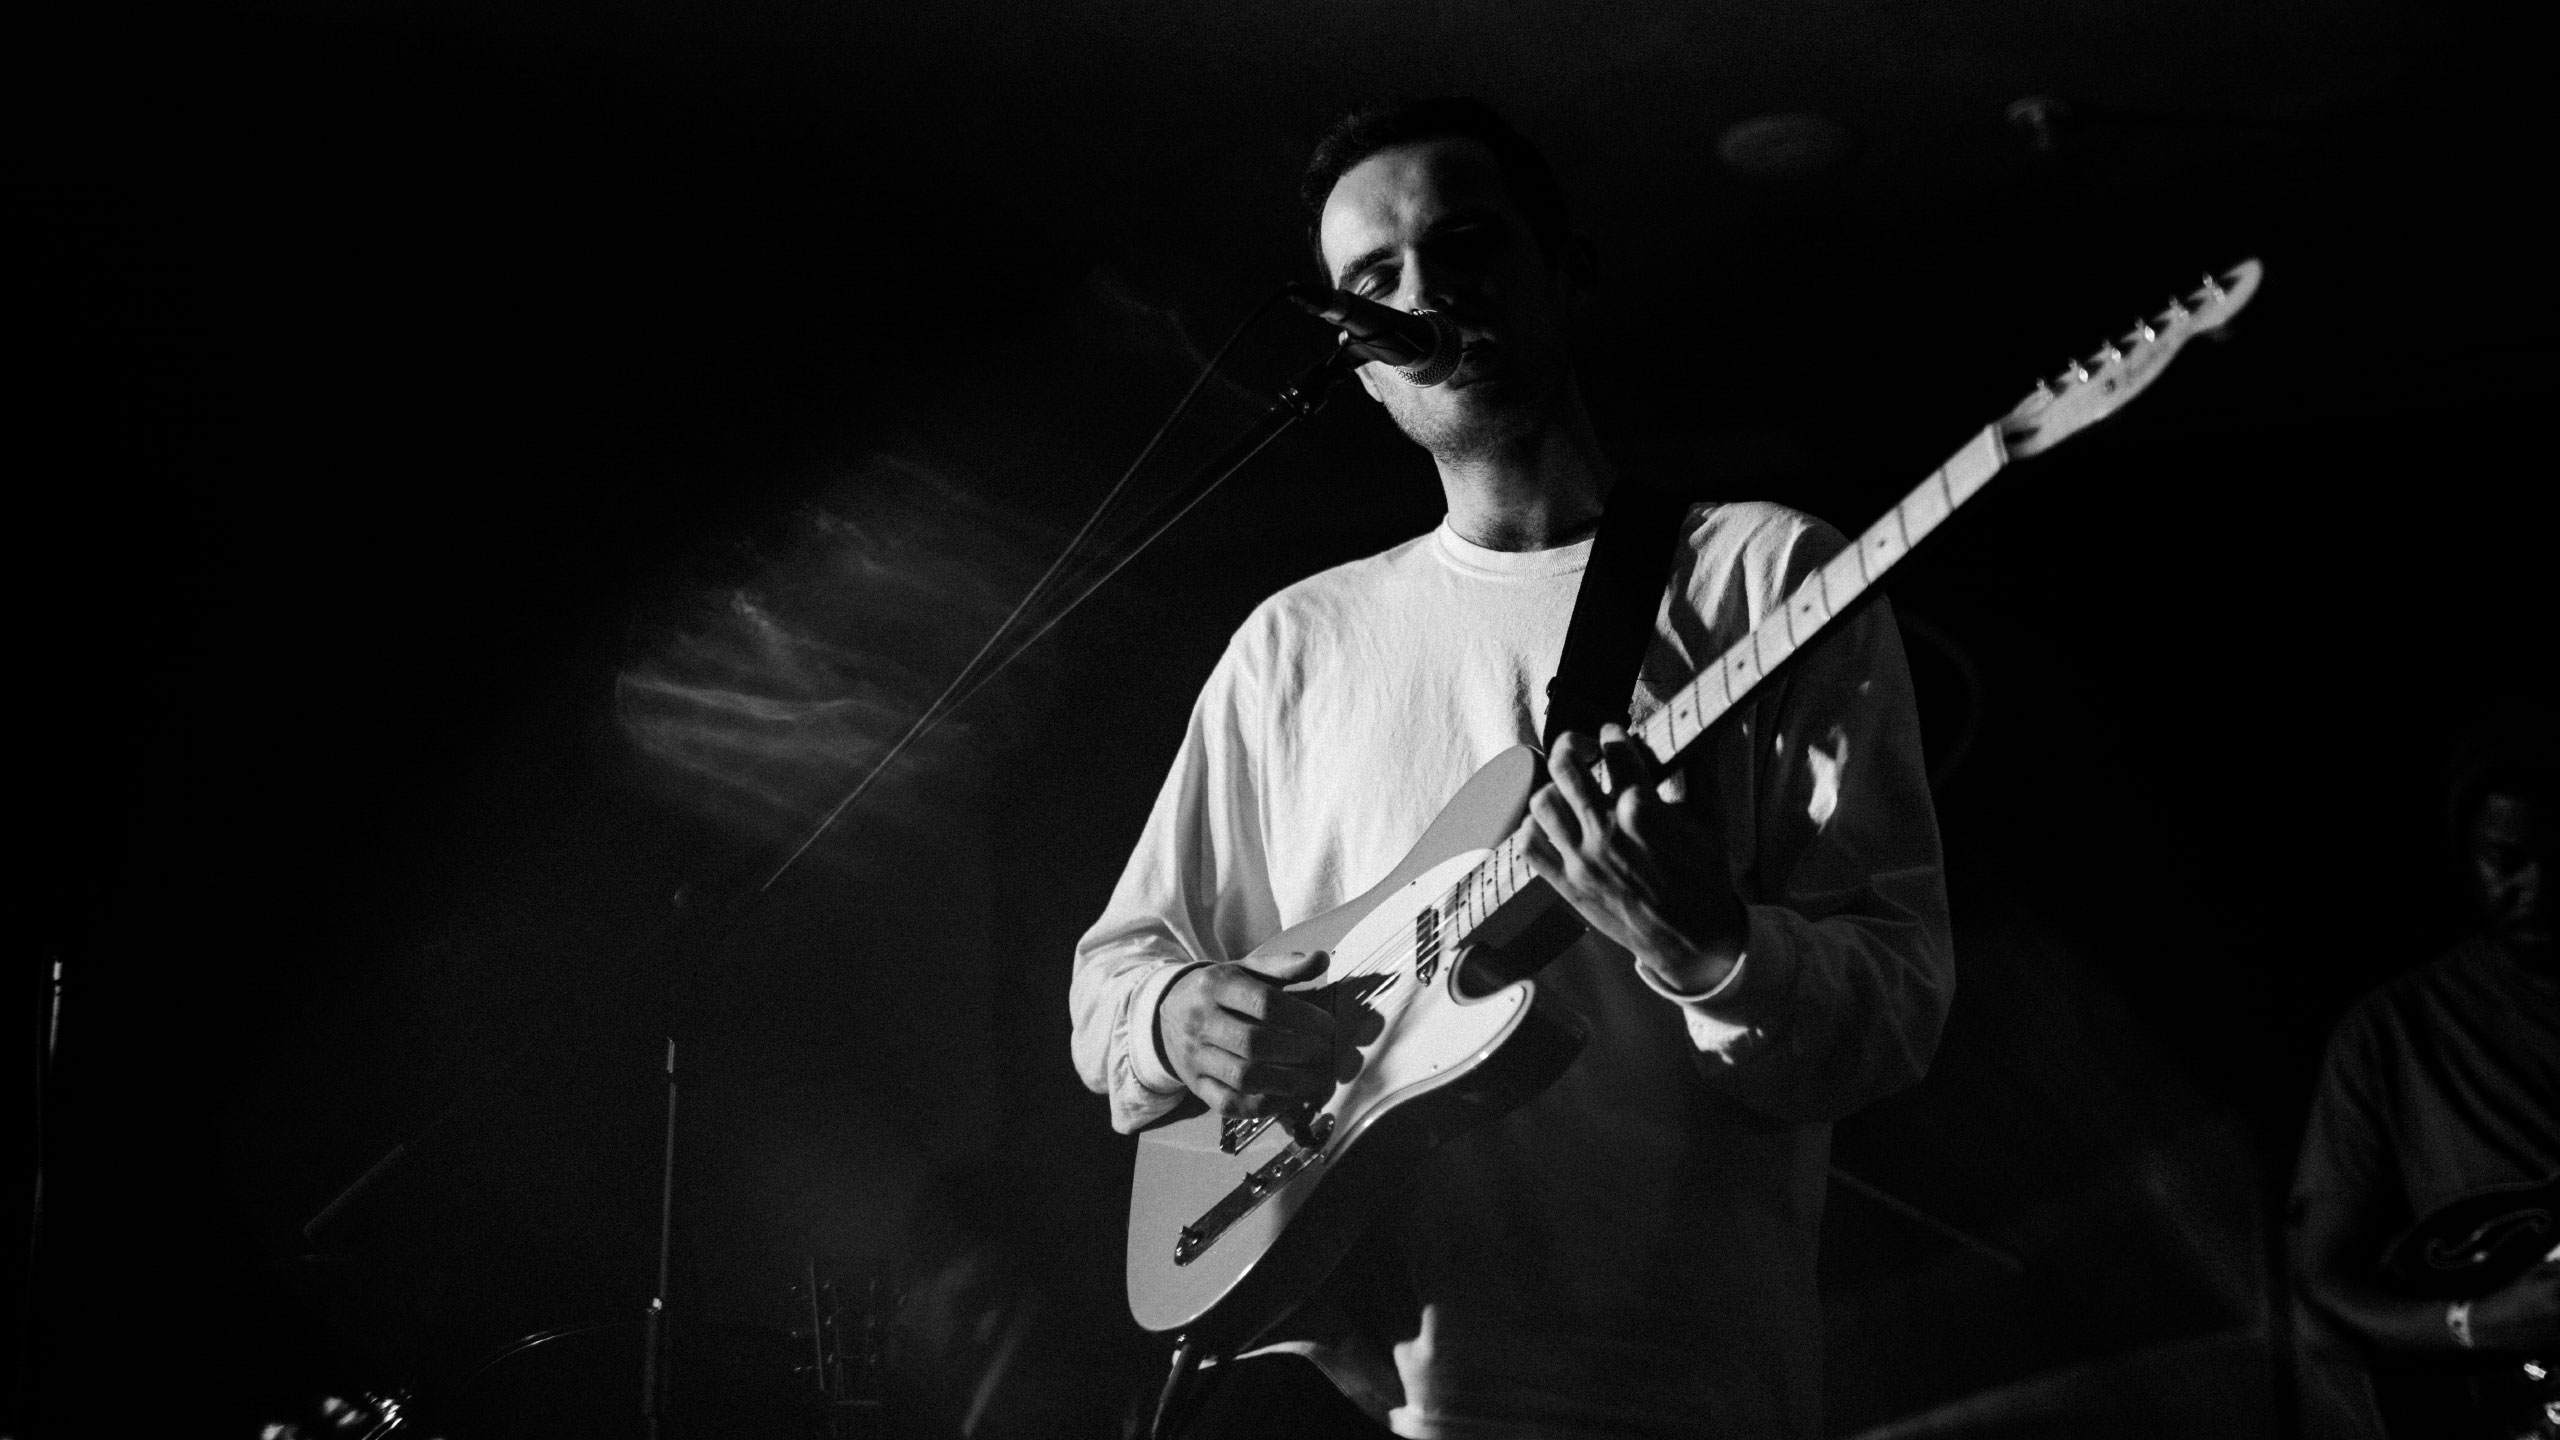 Jordan Rakei in a white sweatshirt plays guitar and sings at PRS for Music Presents